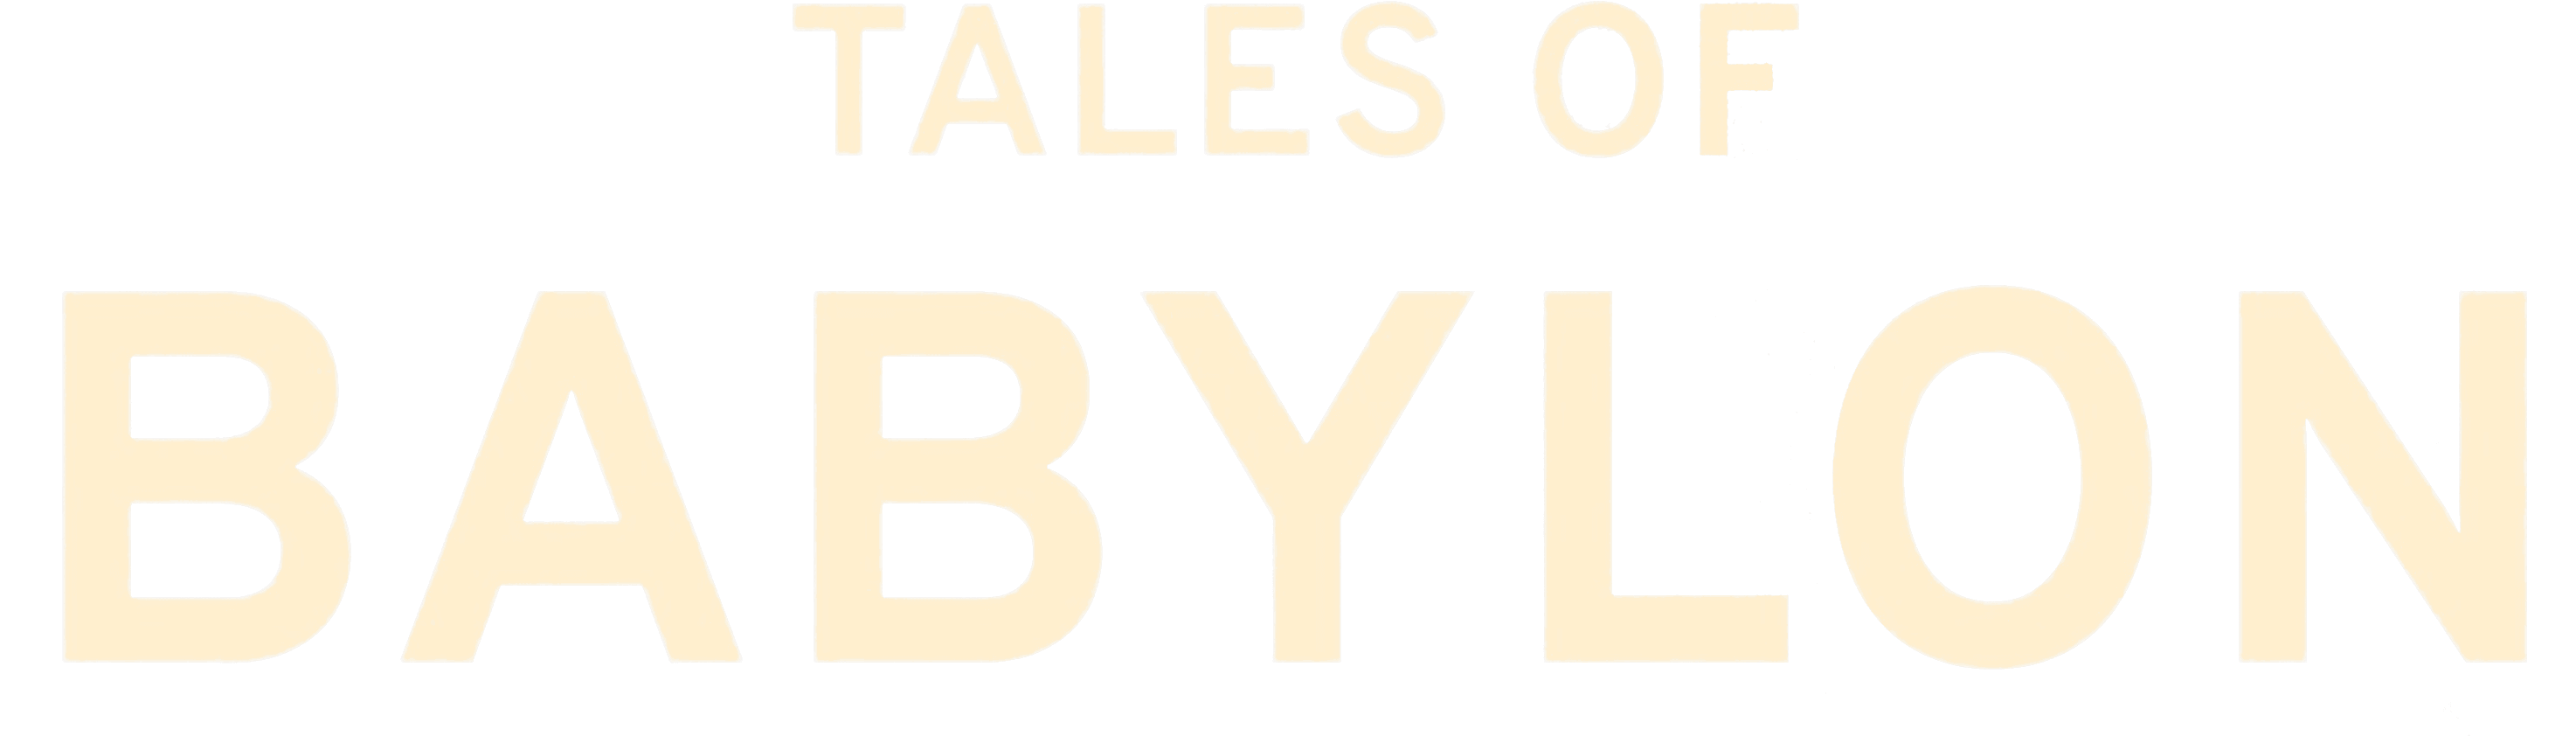 Tales of Babylon logo